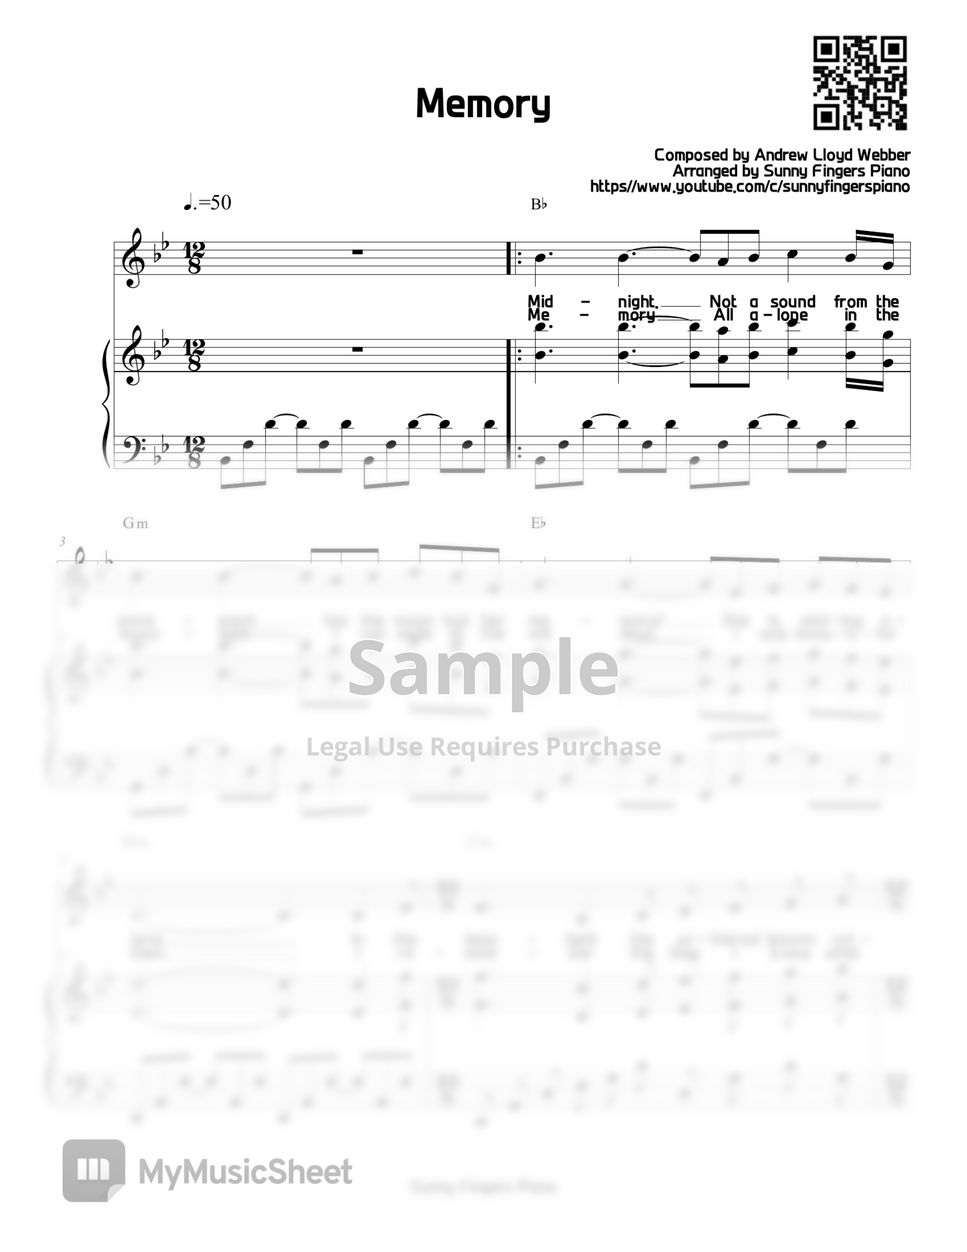 Andrew Lloyd Webber - Memory, Cats (vocal & piano) by Sunny Fingers Piano